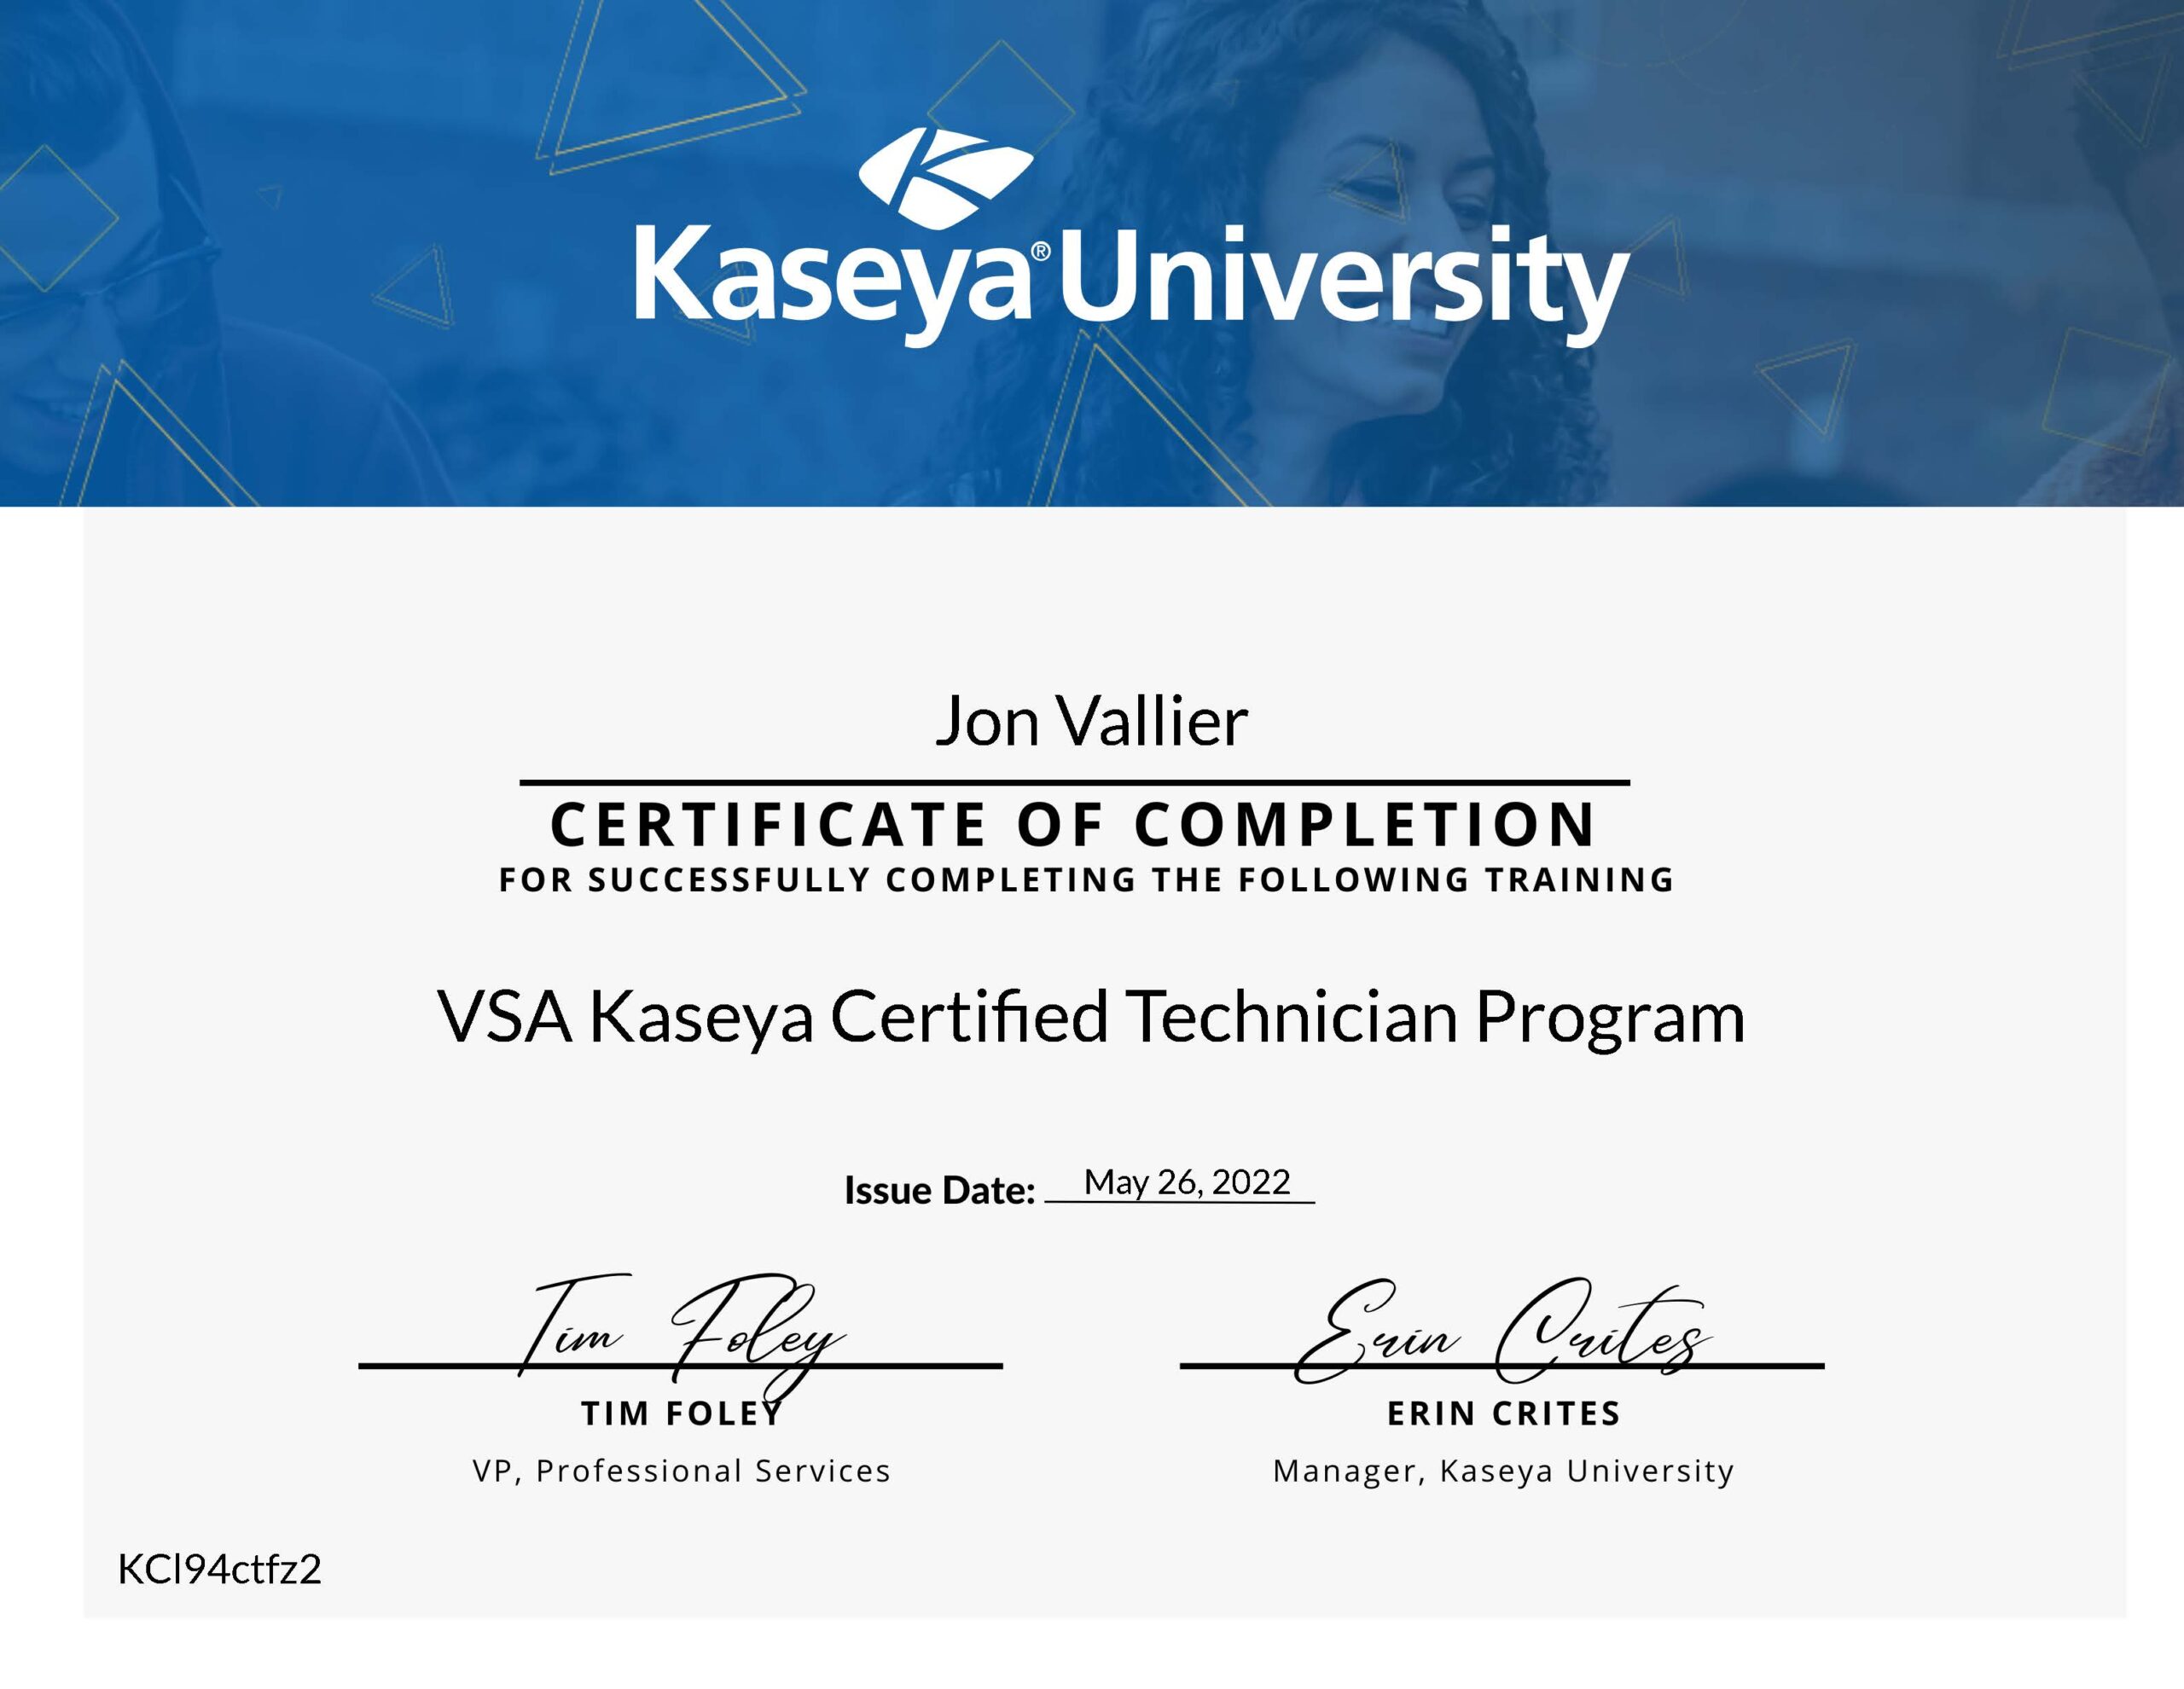 Completed “VSA Kaseya Certified Technician Program” by Kaseya University